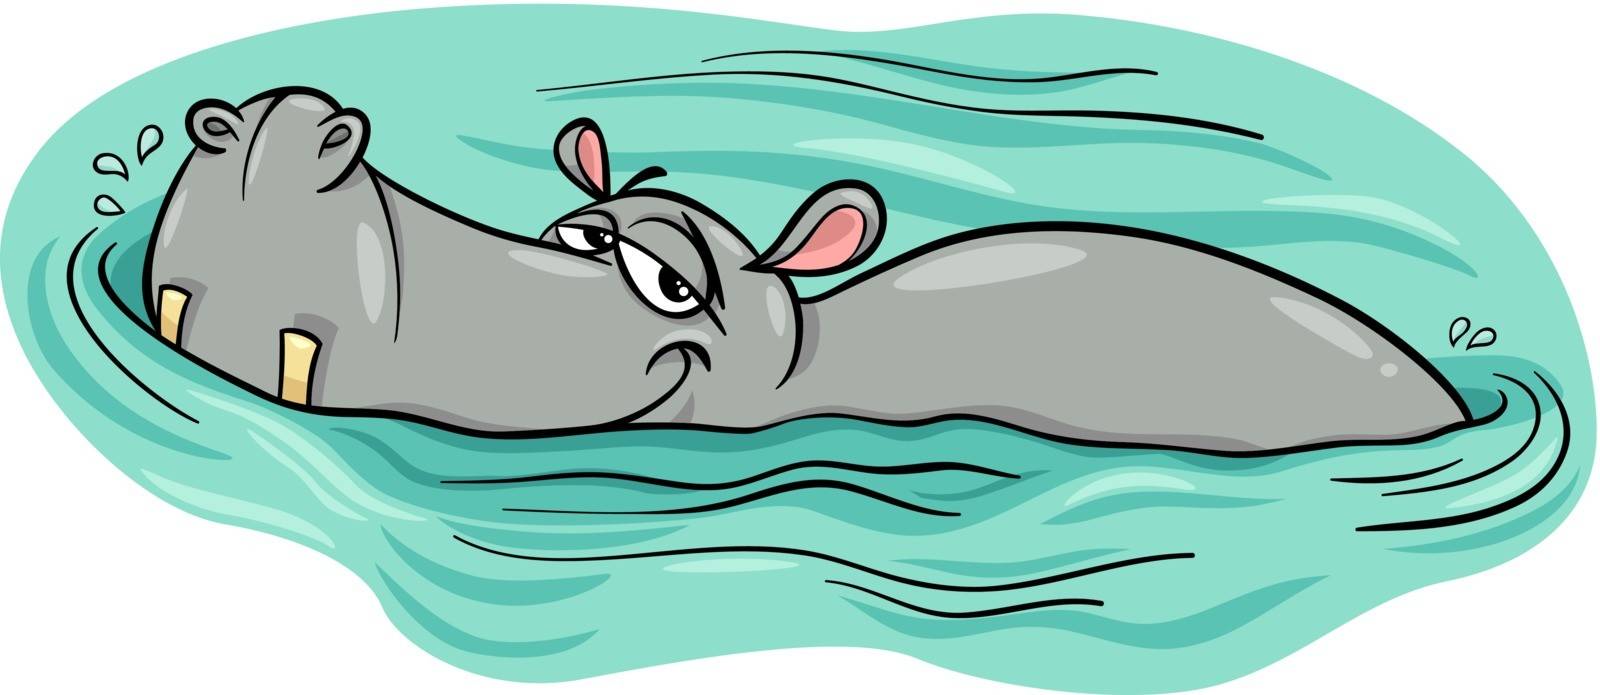 hippo or hippopotamus in river cartoon by izakowski